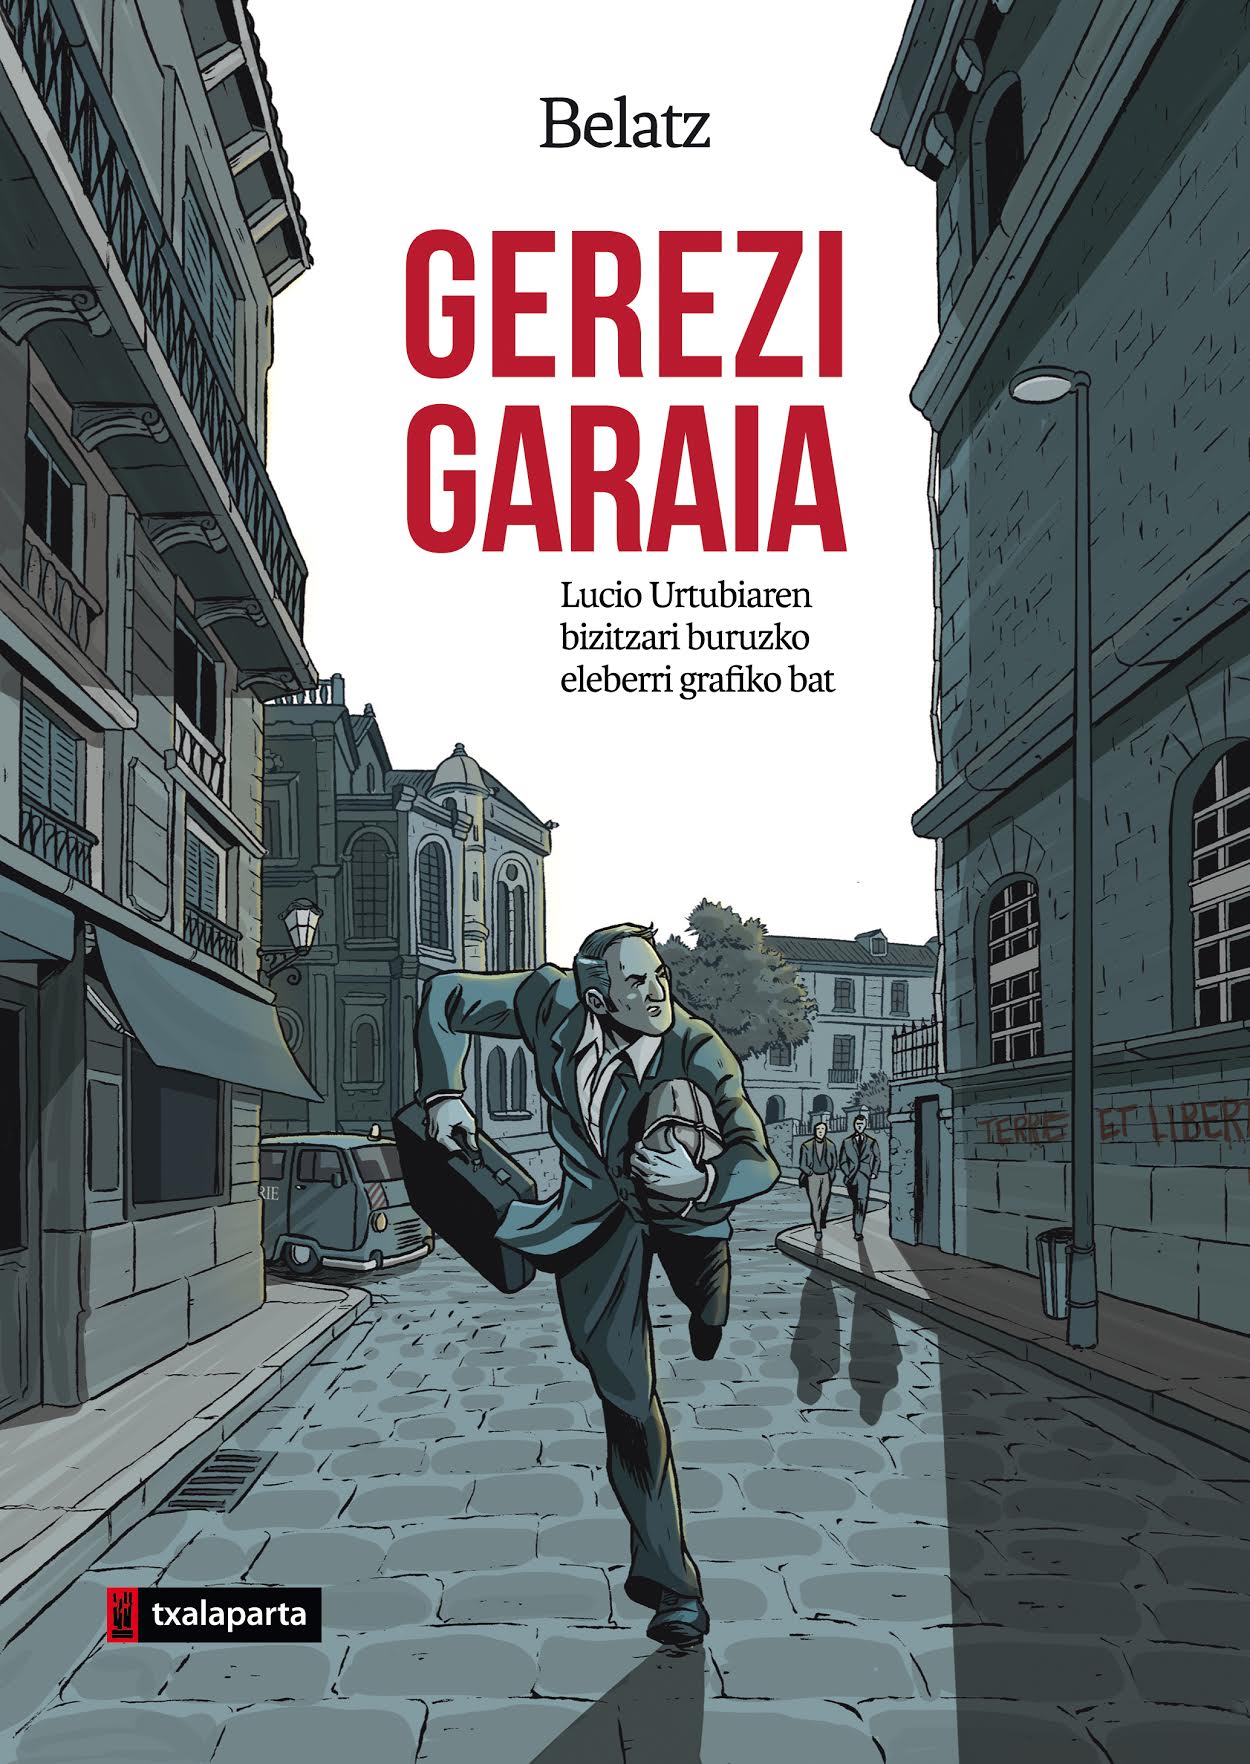 Gerezi garaia (GraphicNovel, Euskara language, Txalaparta)